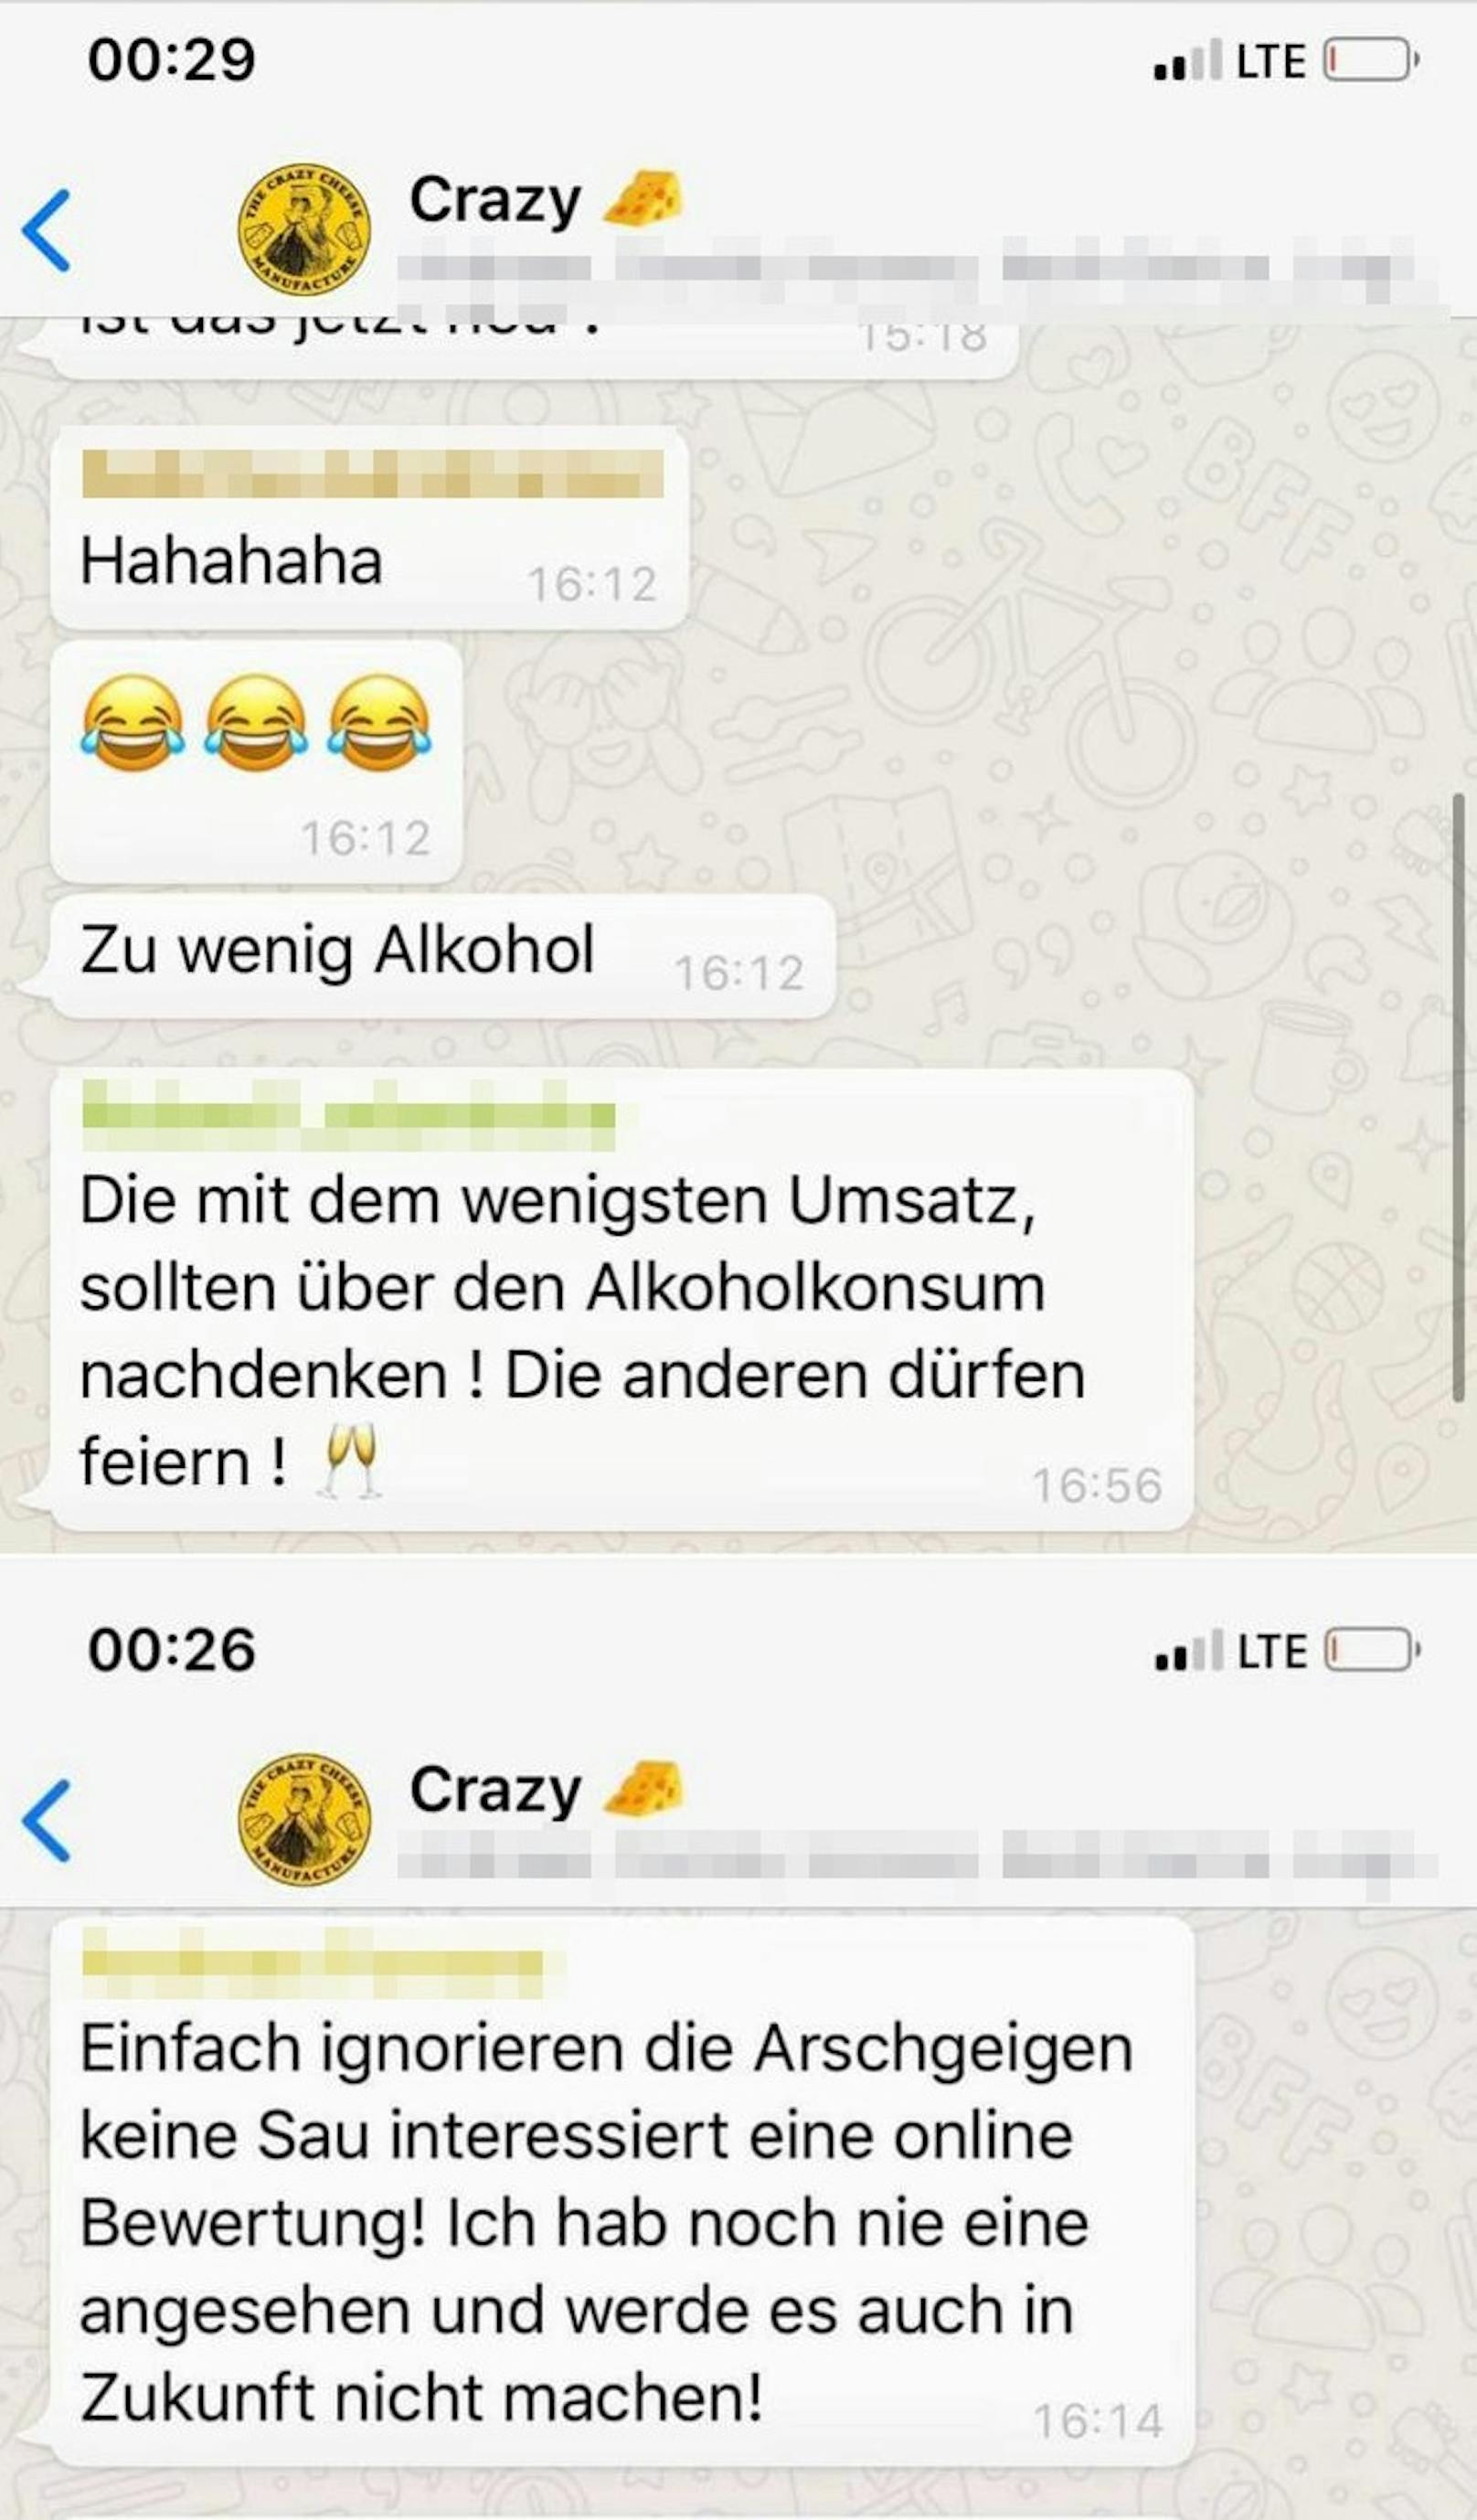 WhatsApp-Gruppe bestätigt Crazy-Cheese-Abzocke